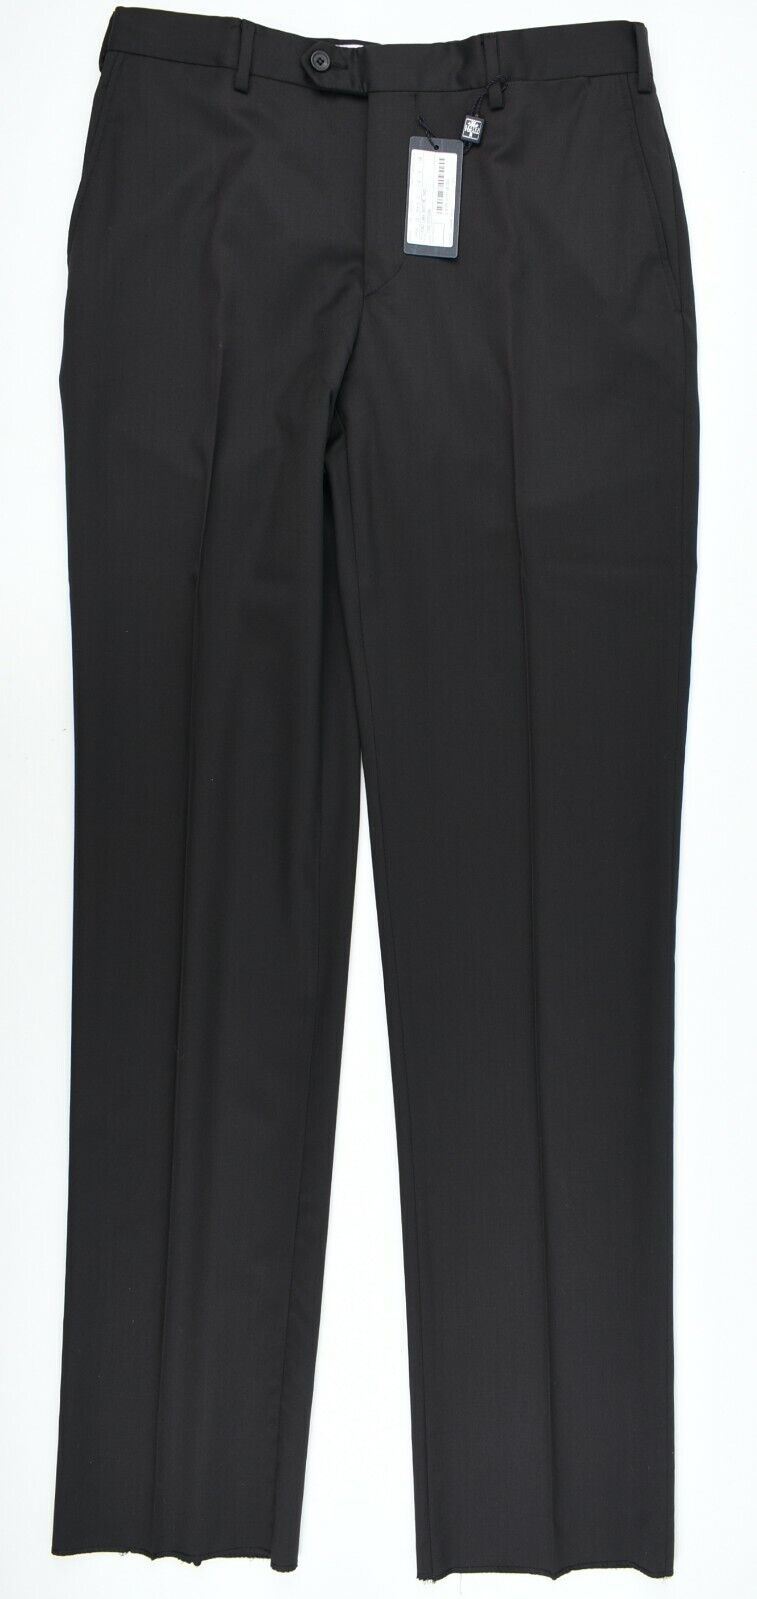 PAL ZILERI Men's Black Trousers, 100% Wool, Made in Italy, size W32